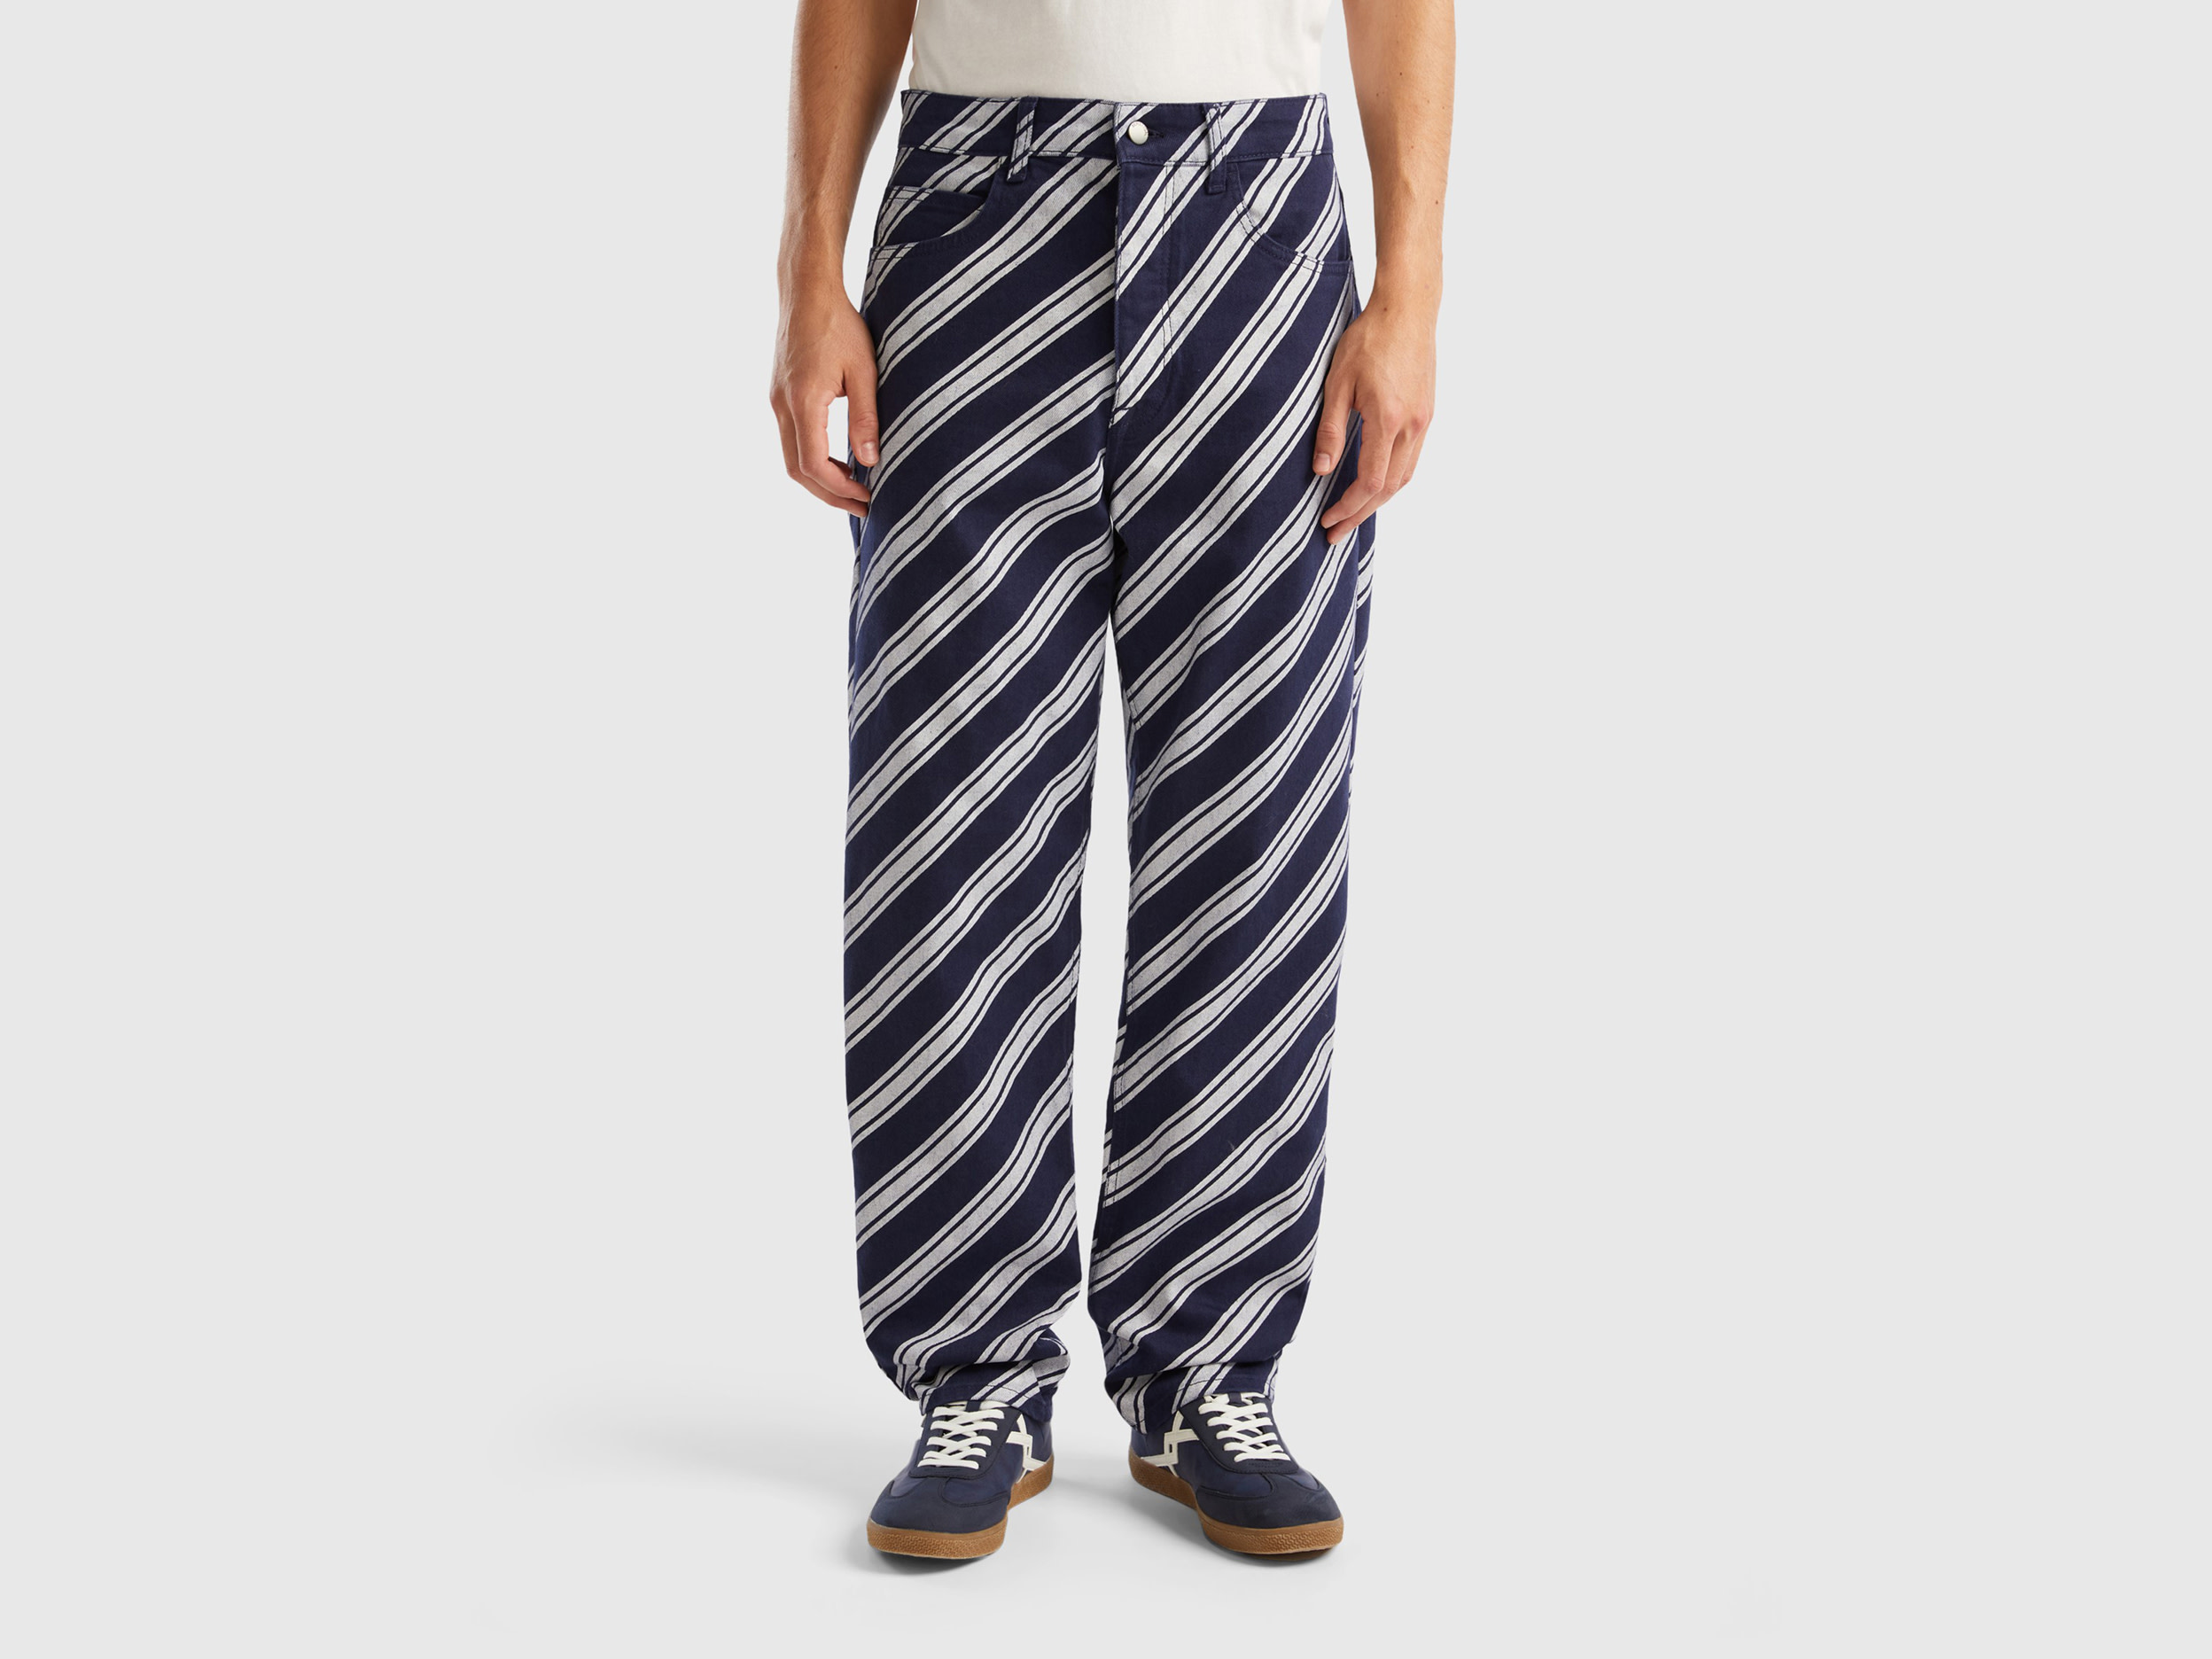 Benetton, Regimental Striped Trousers, size 28, Multi-color, Men